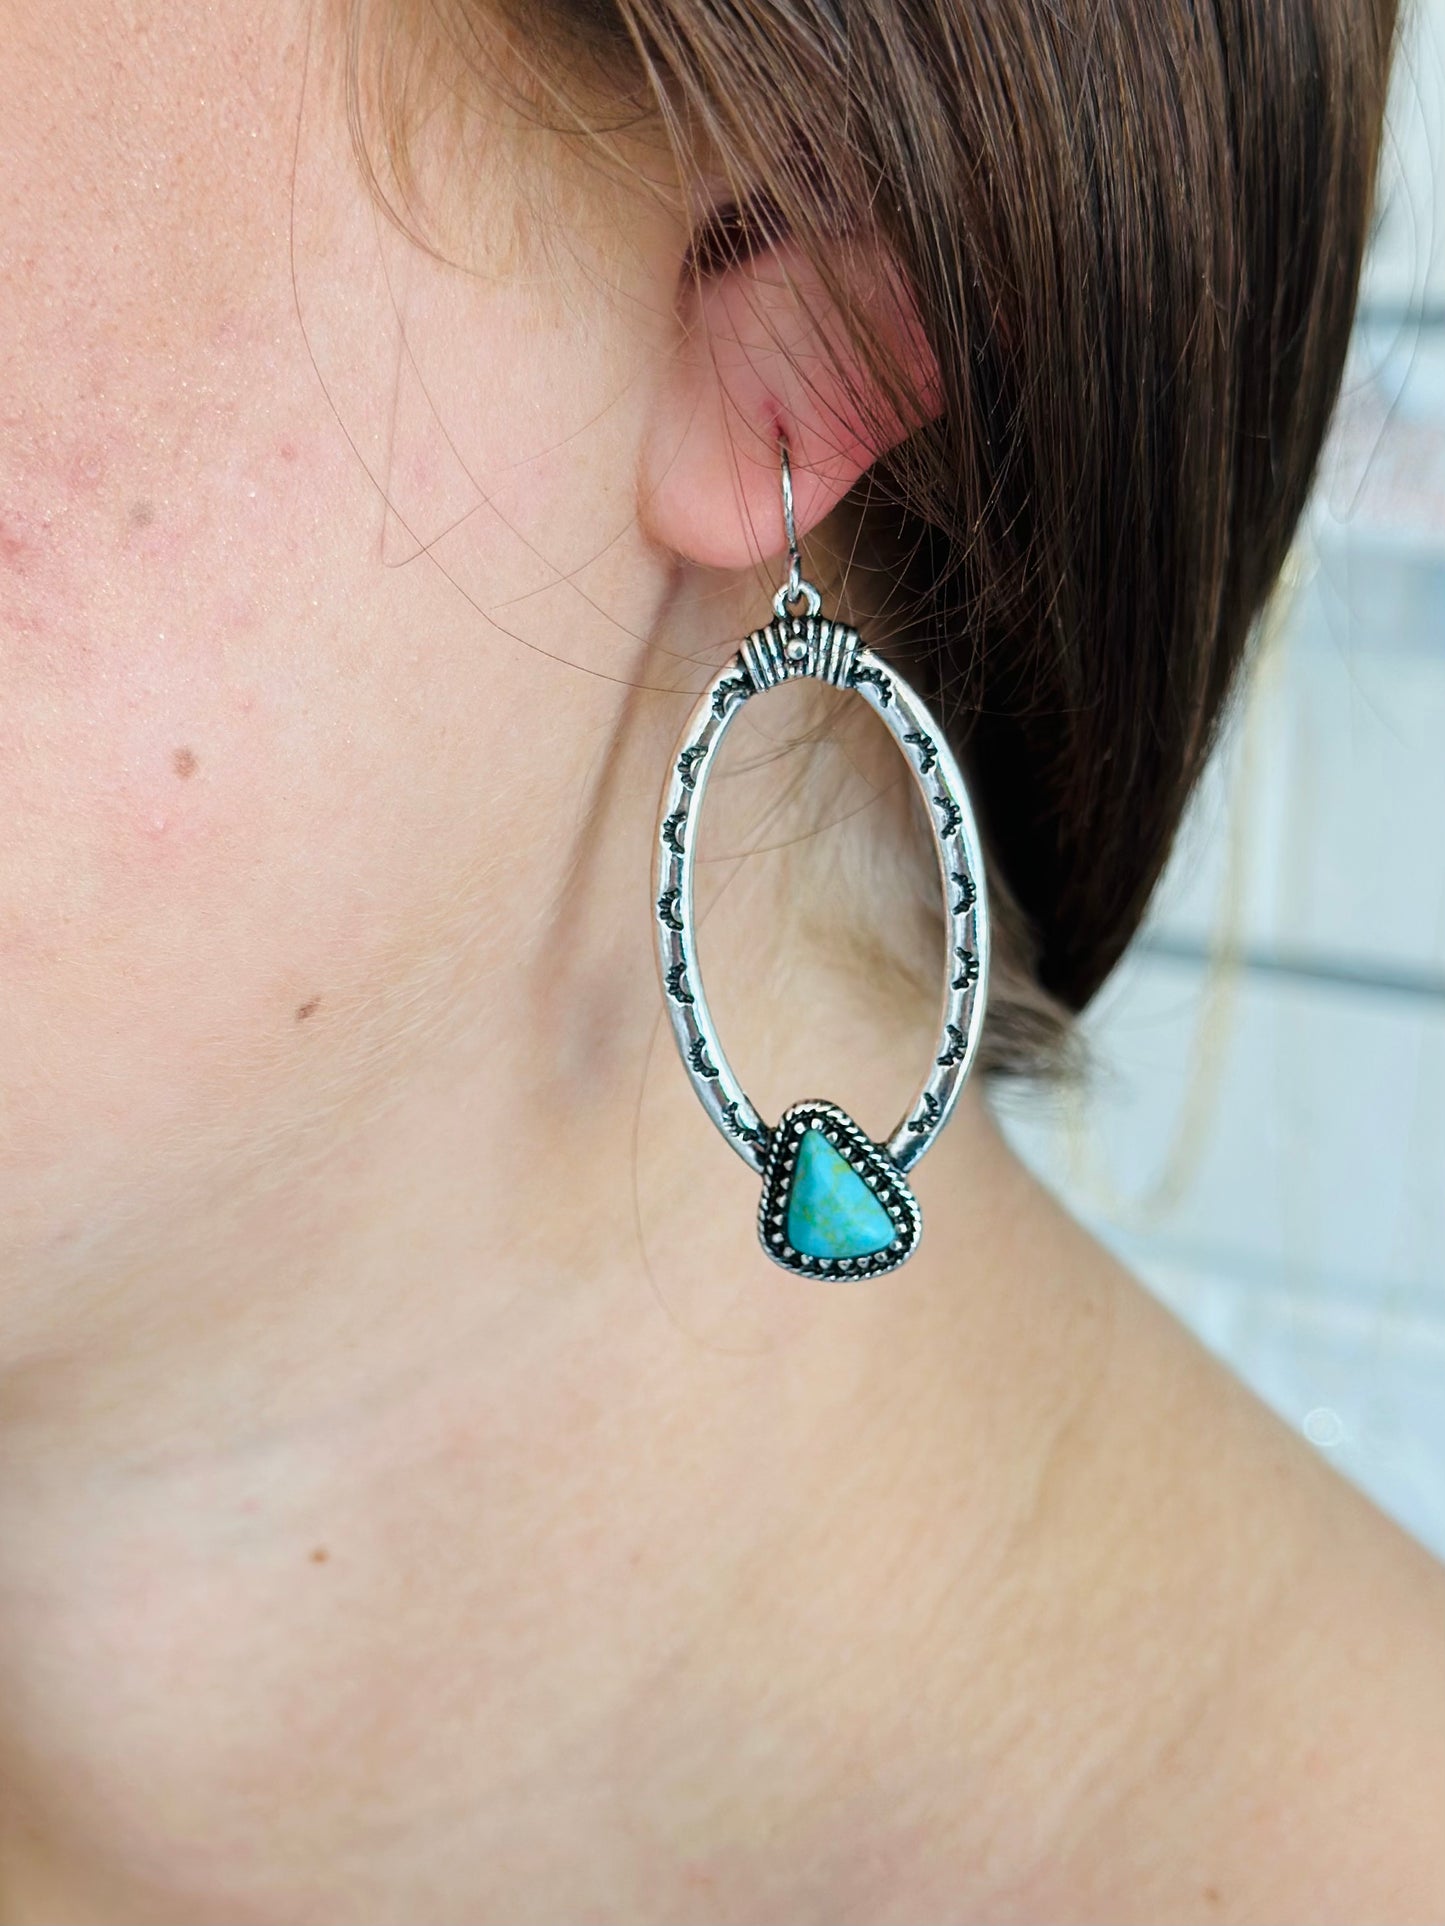 Oval & Silver Turquoise Drop Earrings